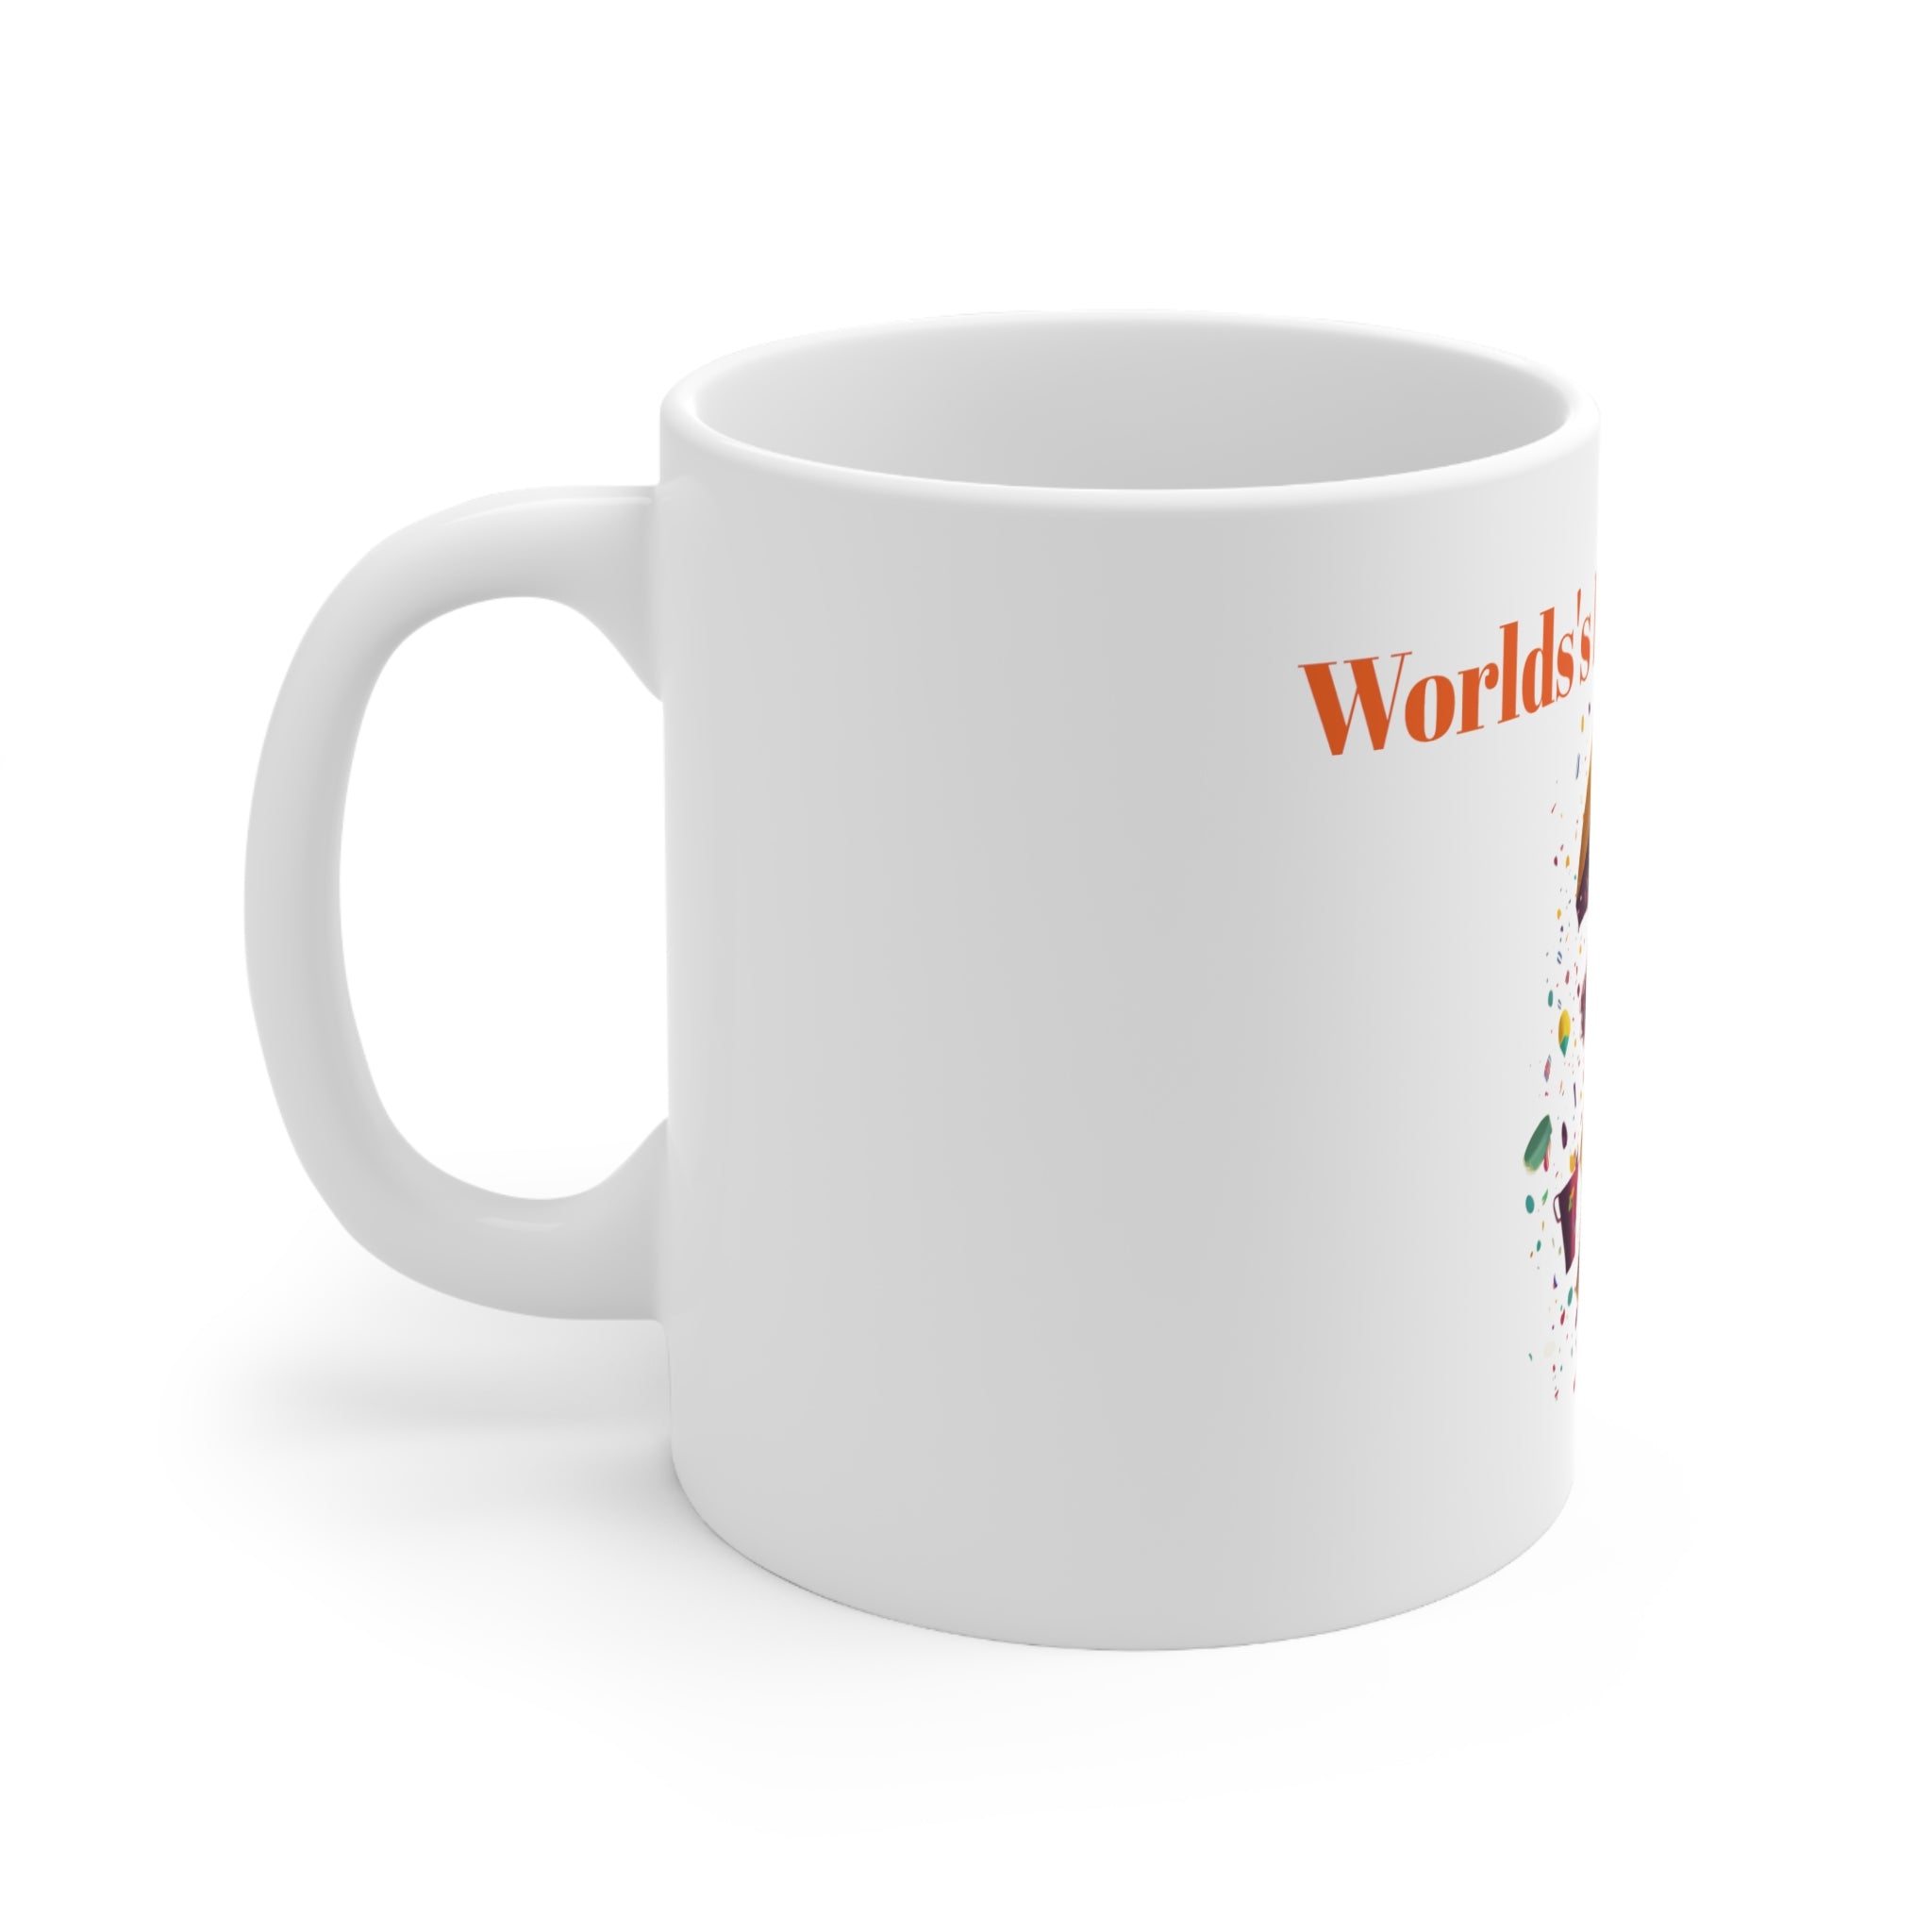 Ceramic Mug 11oz - World's Best Teacher Mug - Charming Humorous Gift - Perfect for Woman Enjoying Coffee With Sprinkles in the Rain